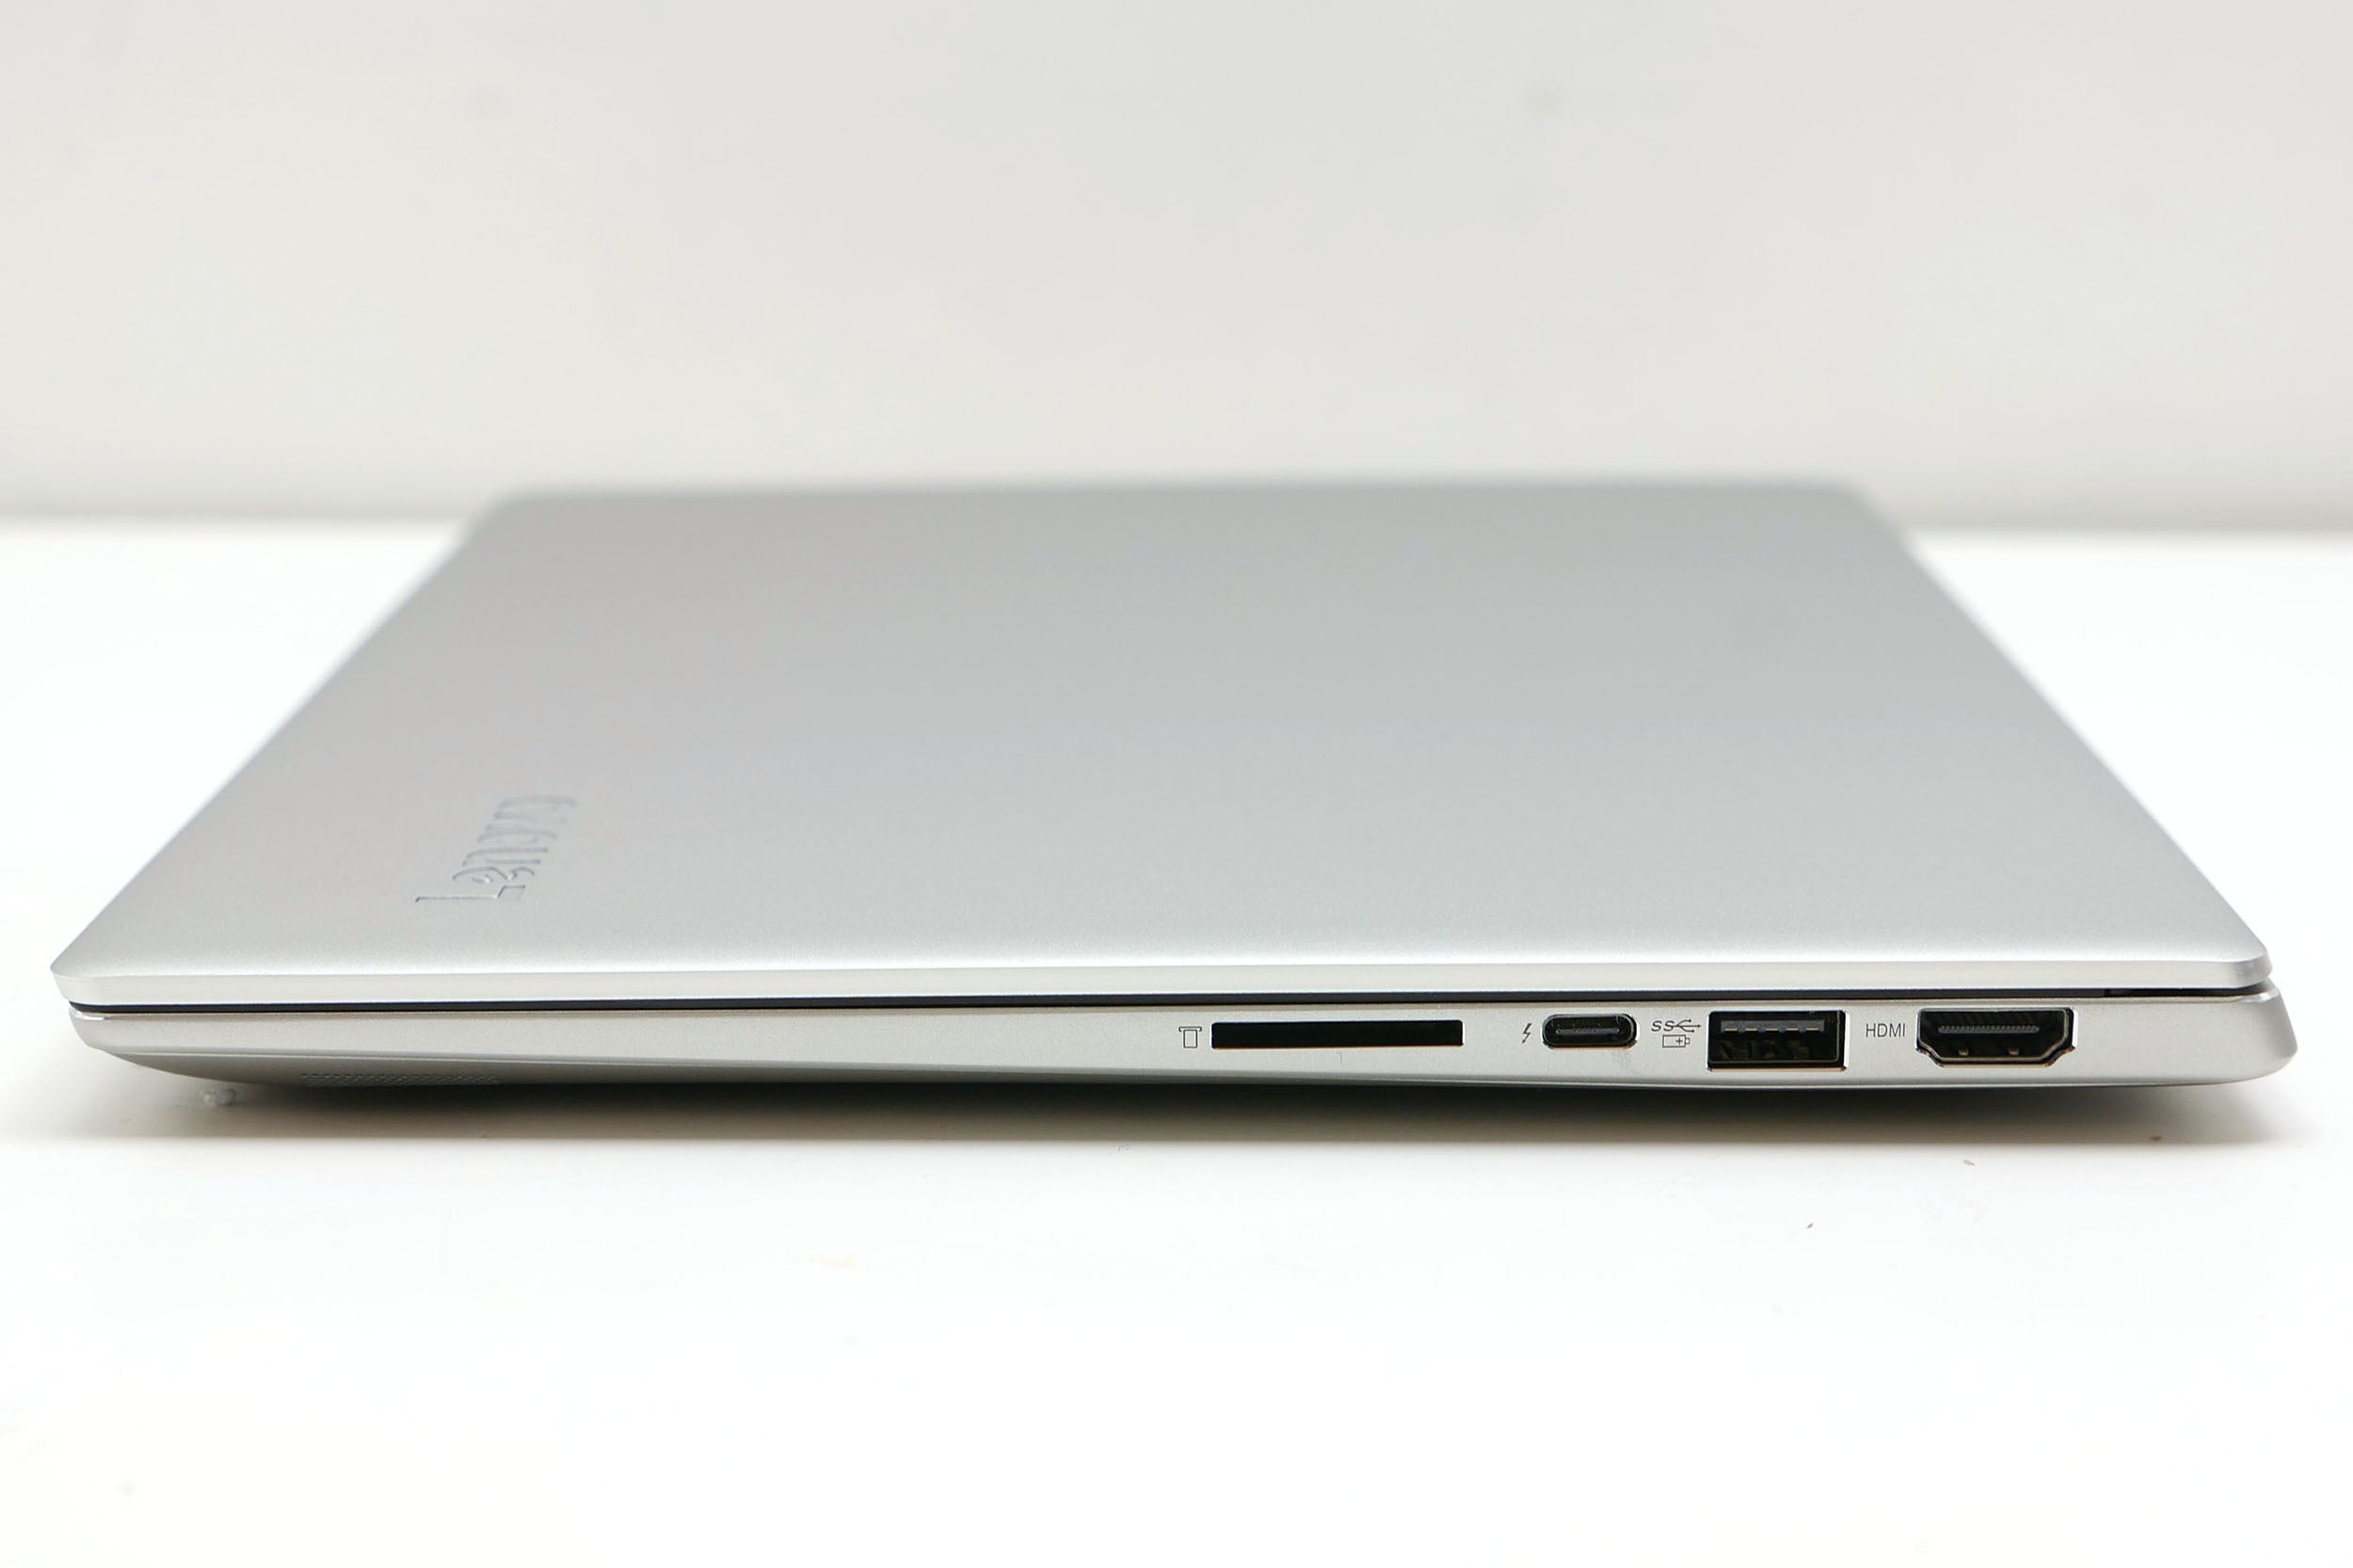 Lenovo IdeaPad 720S laptop showing ports on side.